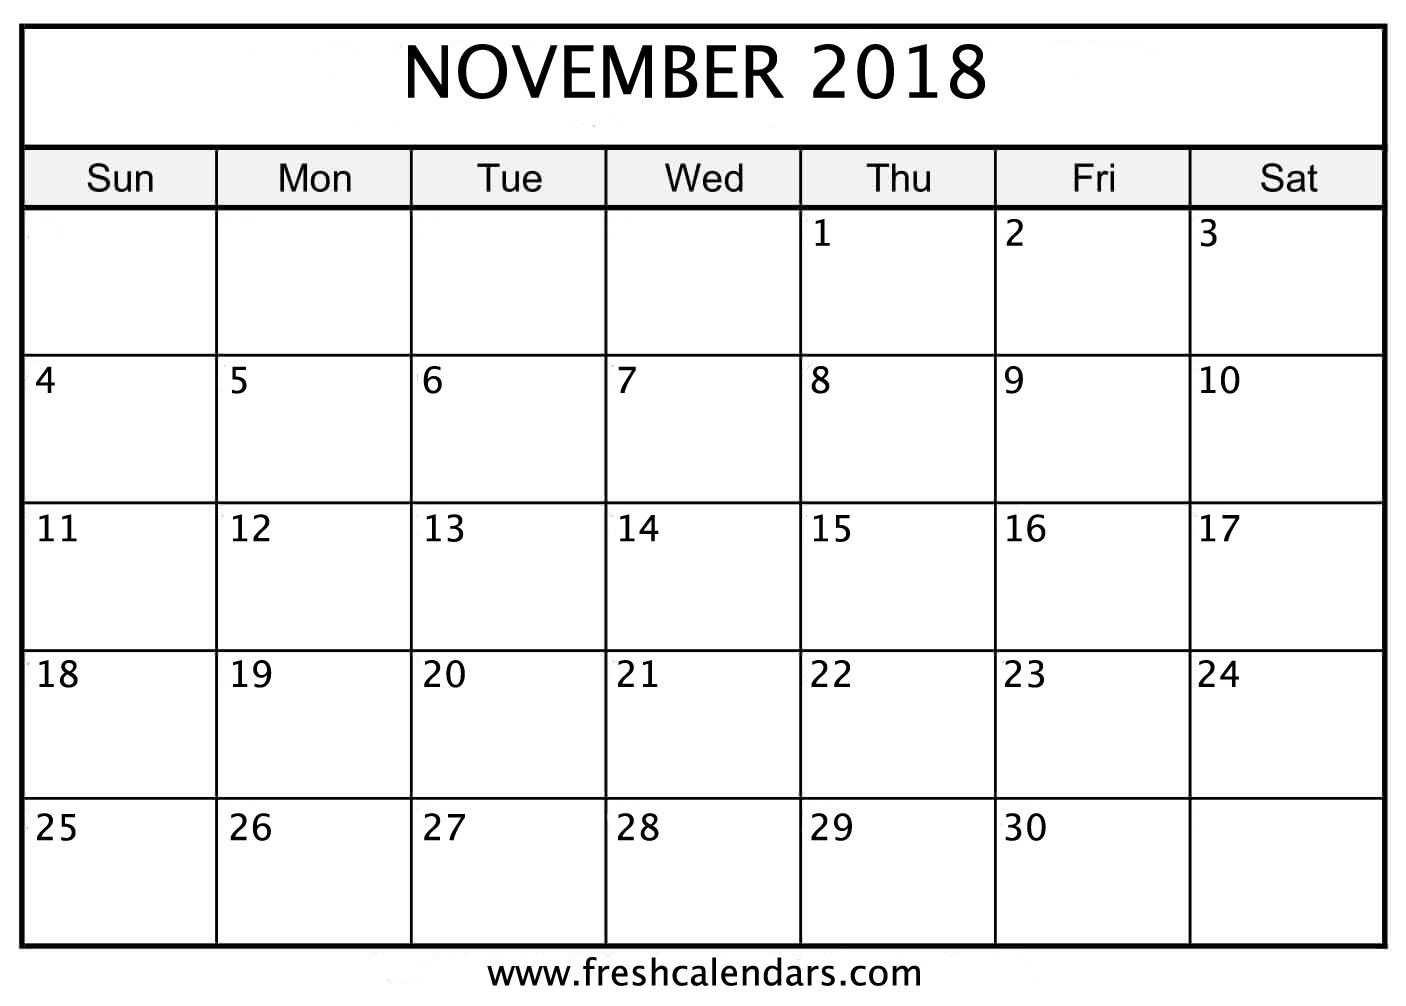 November 2018 Printable Calendars Fresh Calendars